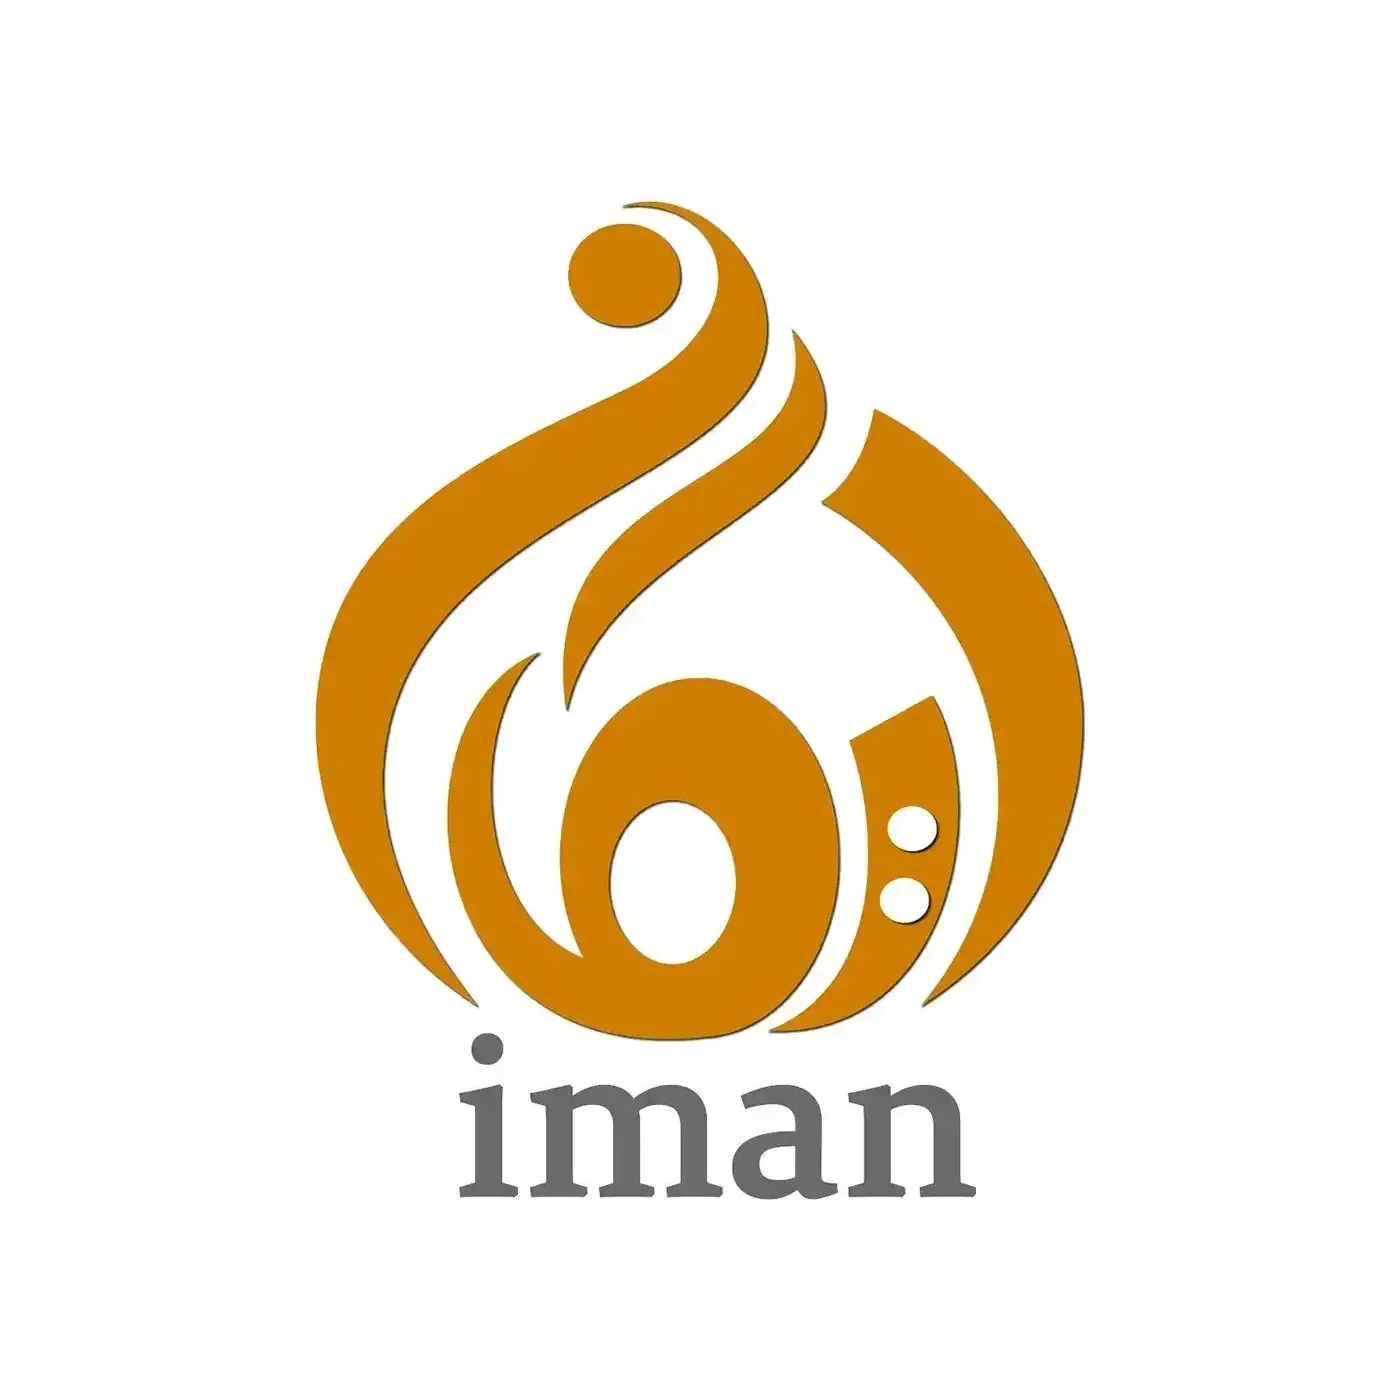 Iman TV